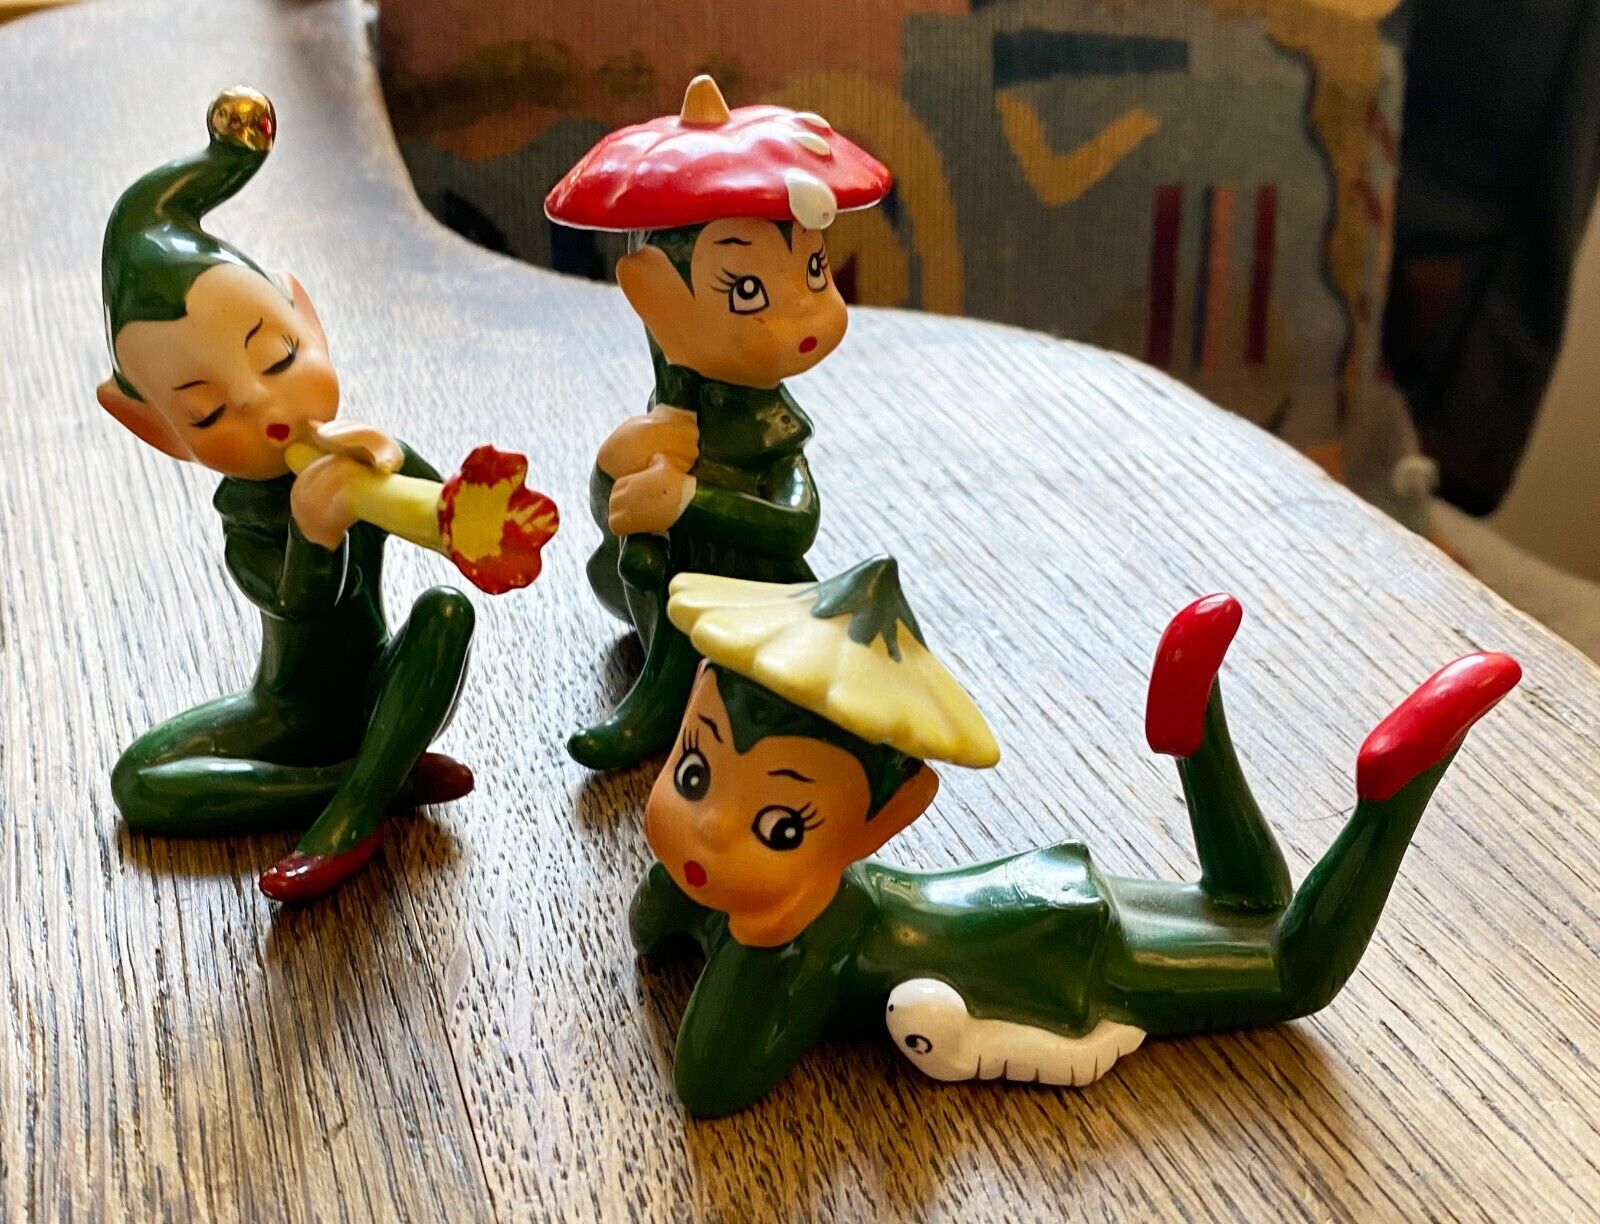 Vintage 1950s Flower/Mushroom Spring/Summer Elves - 3 Figurines - Good Condition